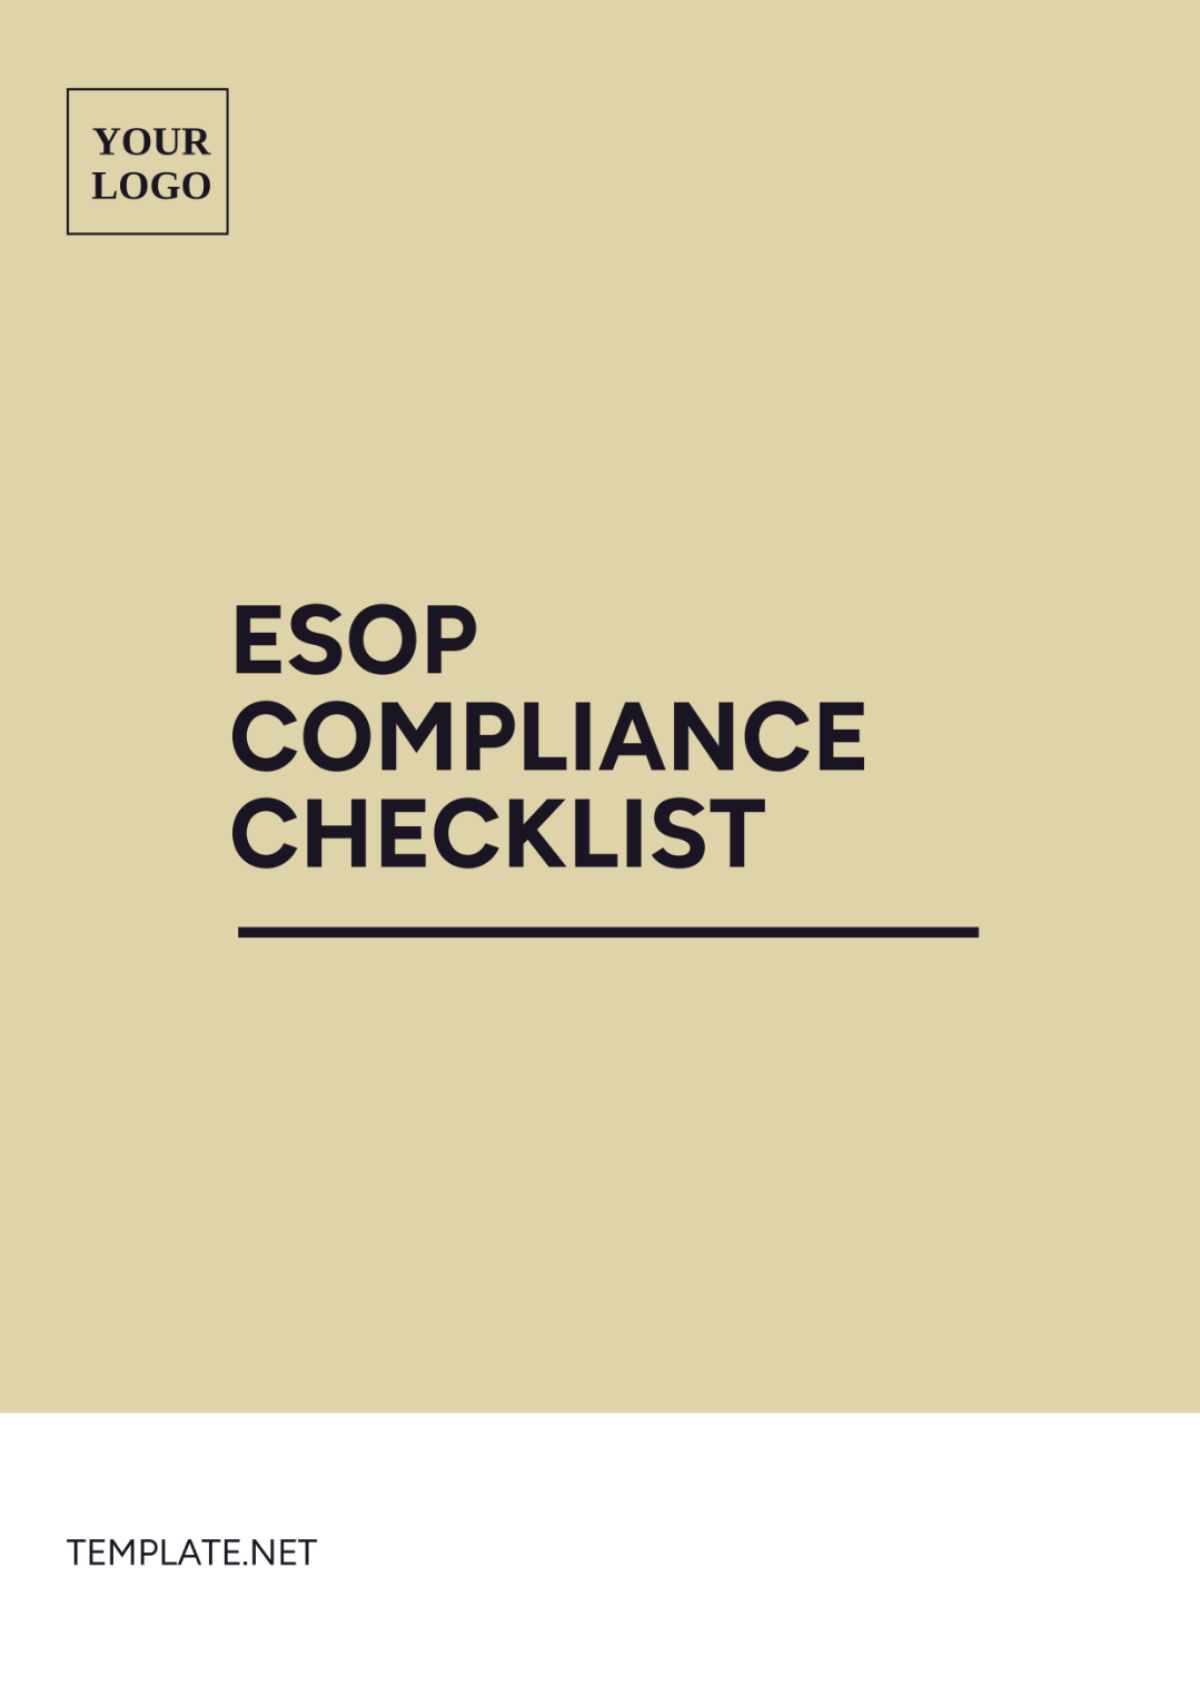 ESOP Compliance Checklist Template